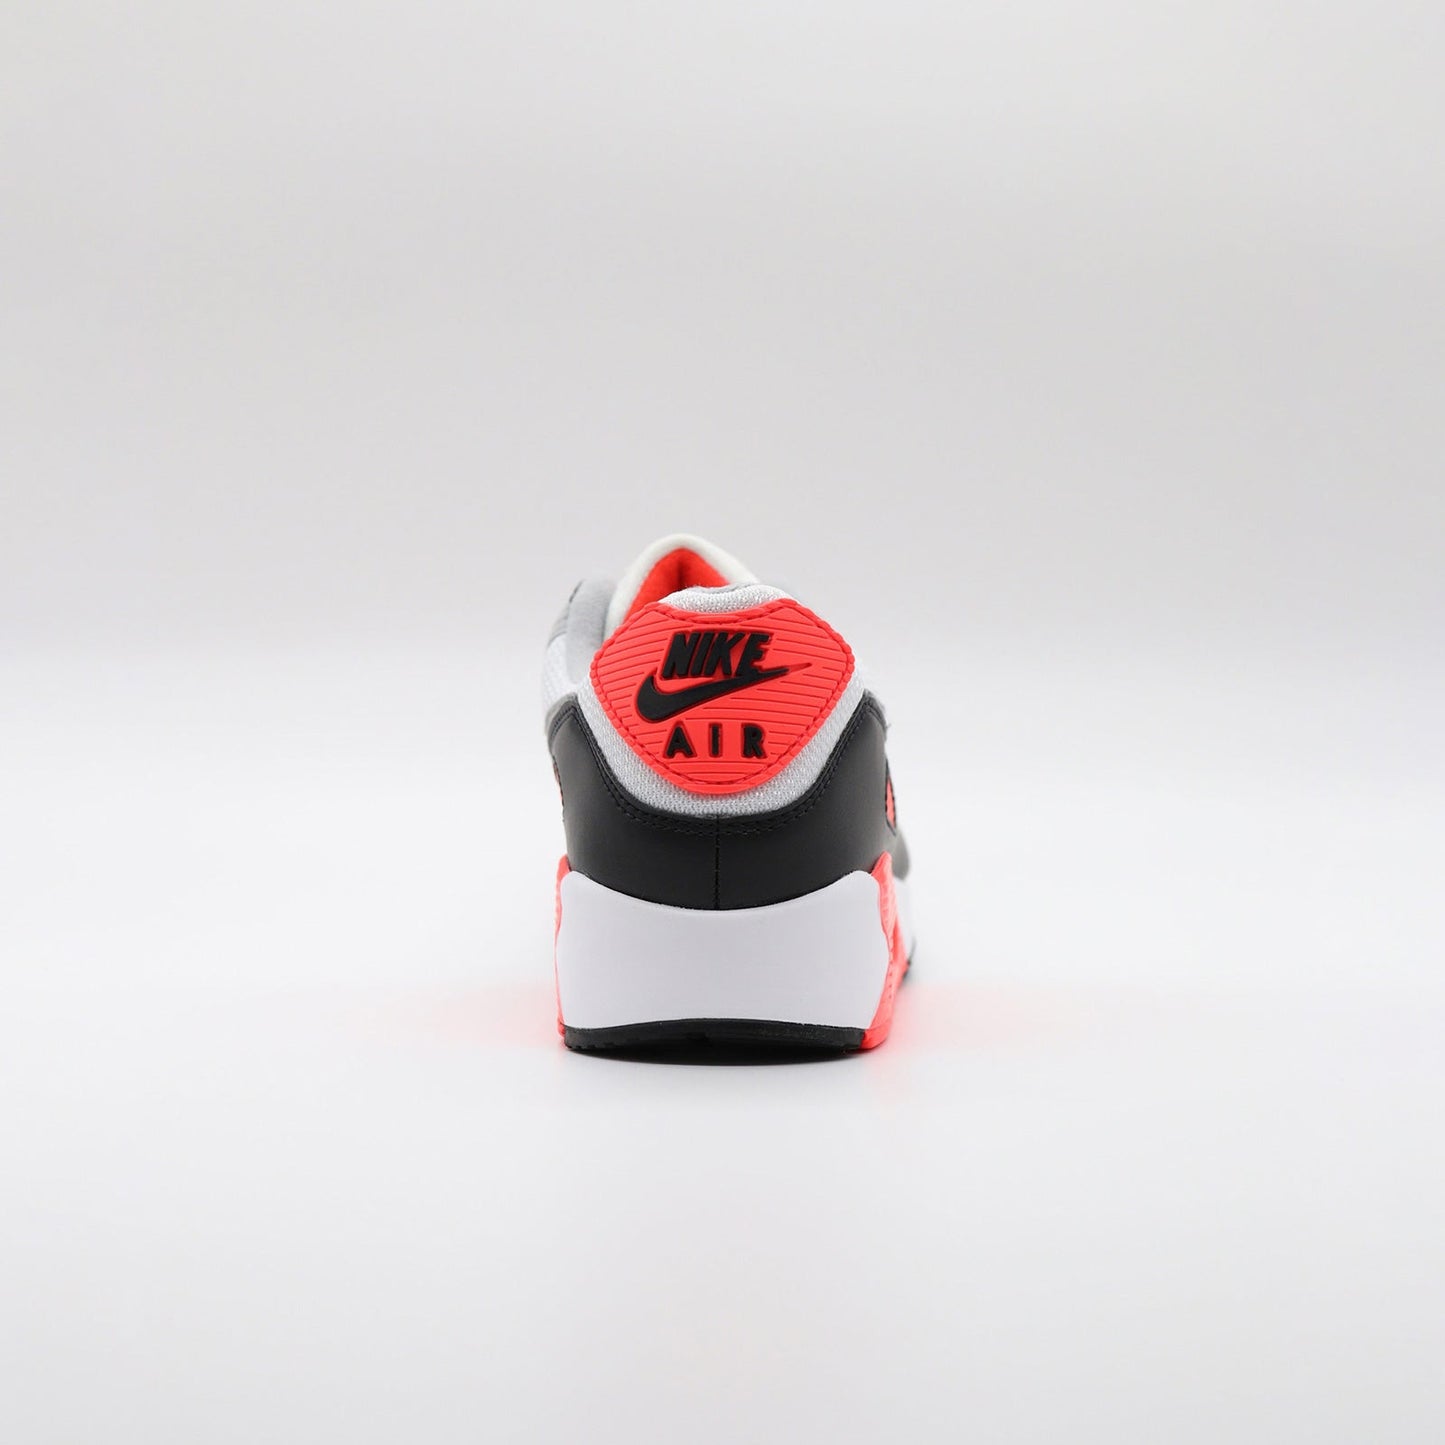 Nike Air Max 90, Infrared (2020)